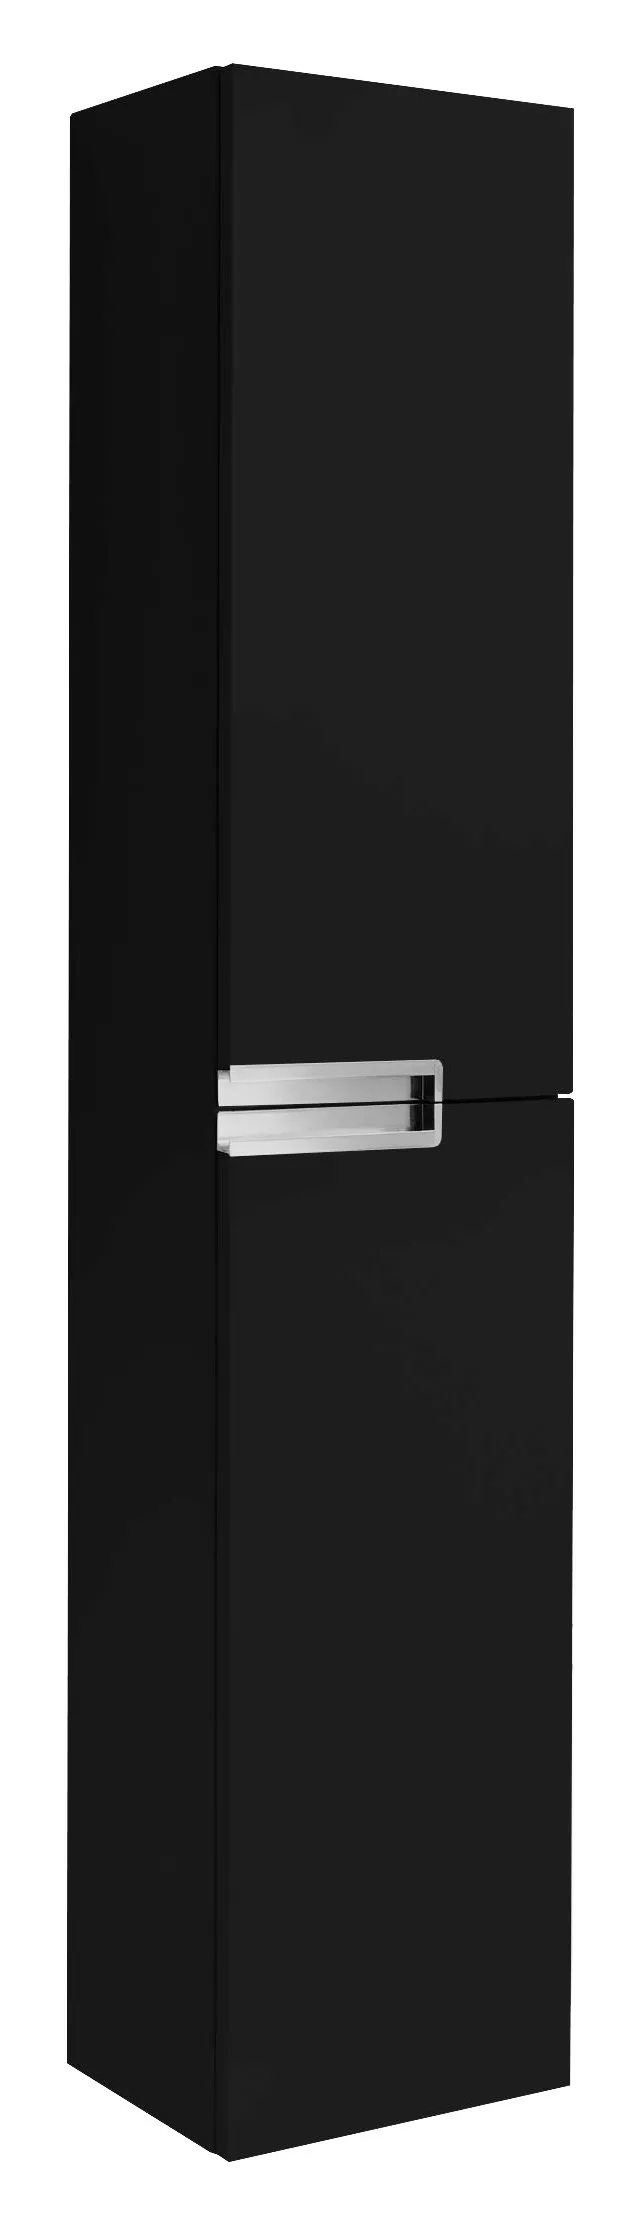 Шкаф-пенал Roca Victoria Nord Black Edition 30 см (ZRU9000095)